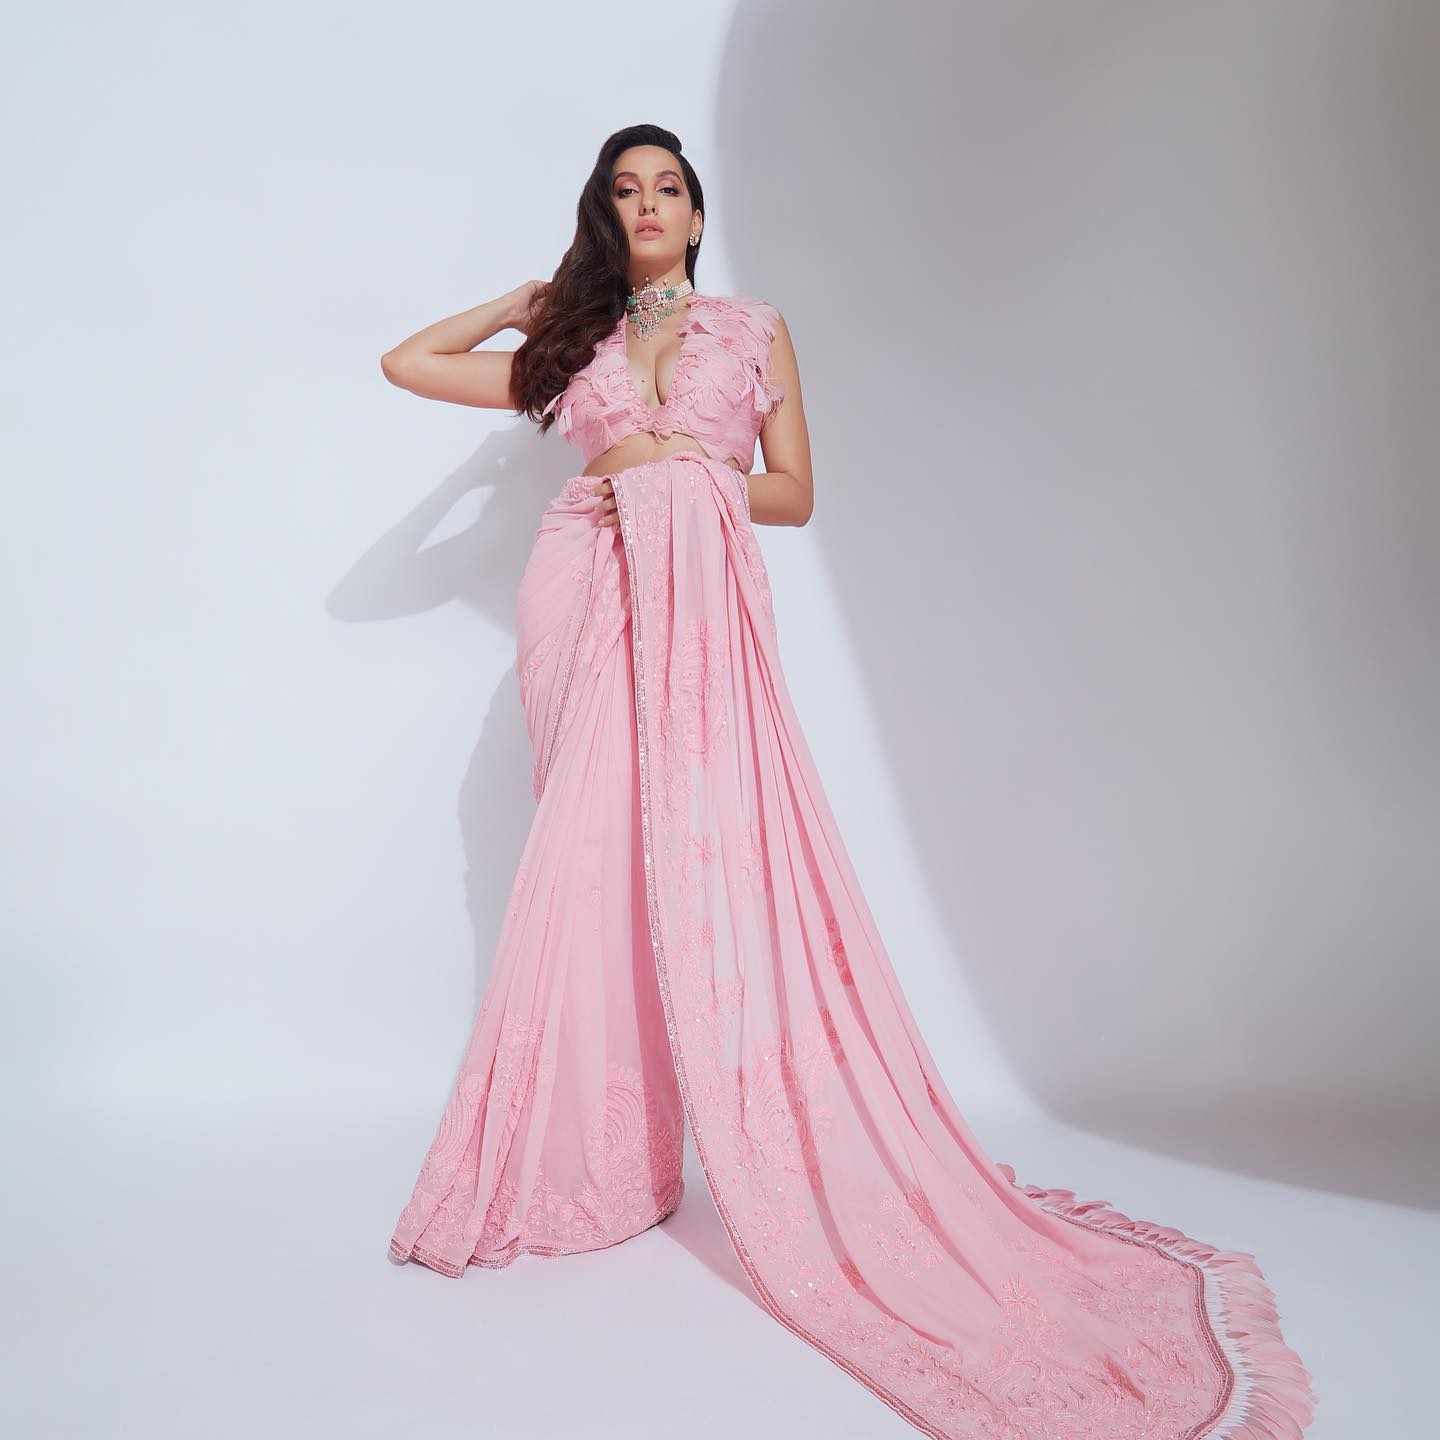 Nora Fatehi cleavage pink saree hot